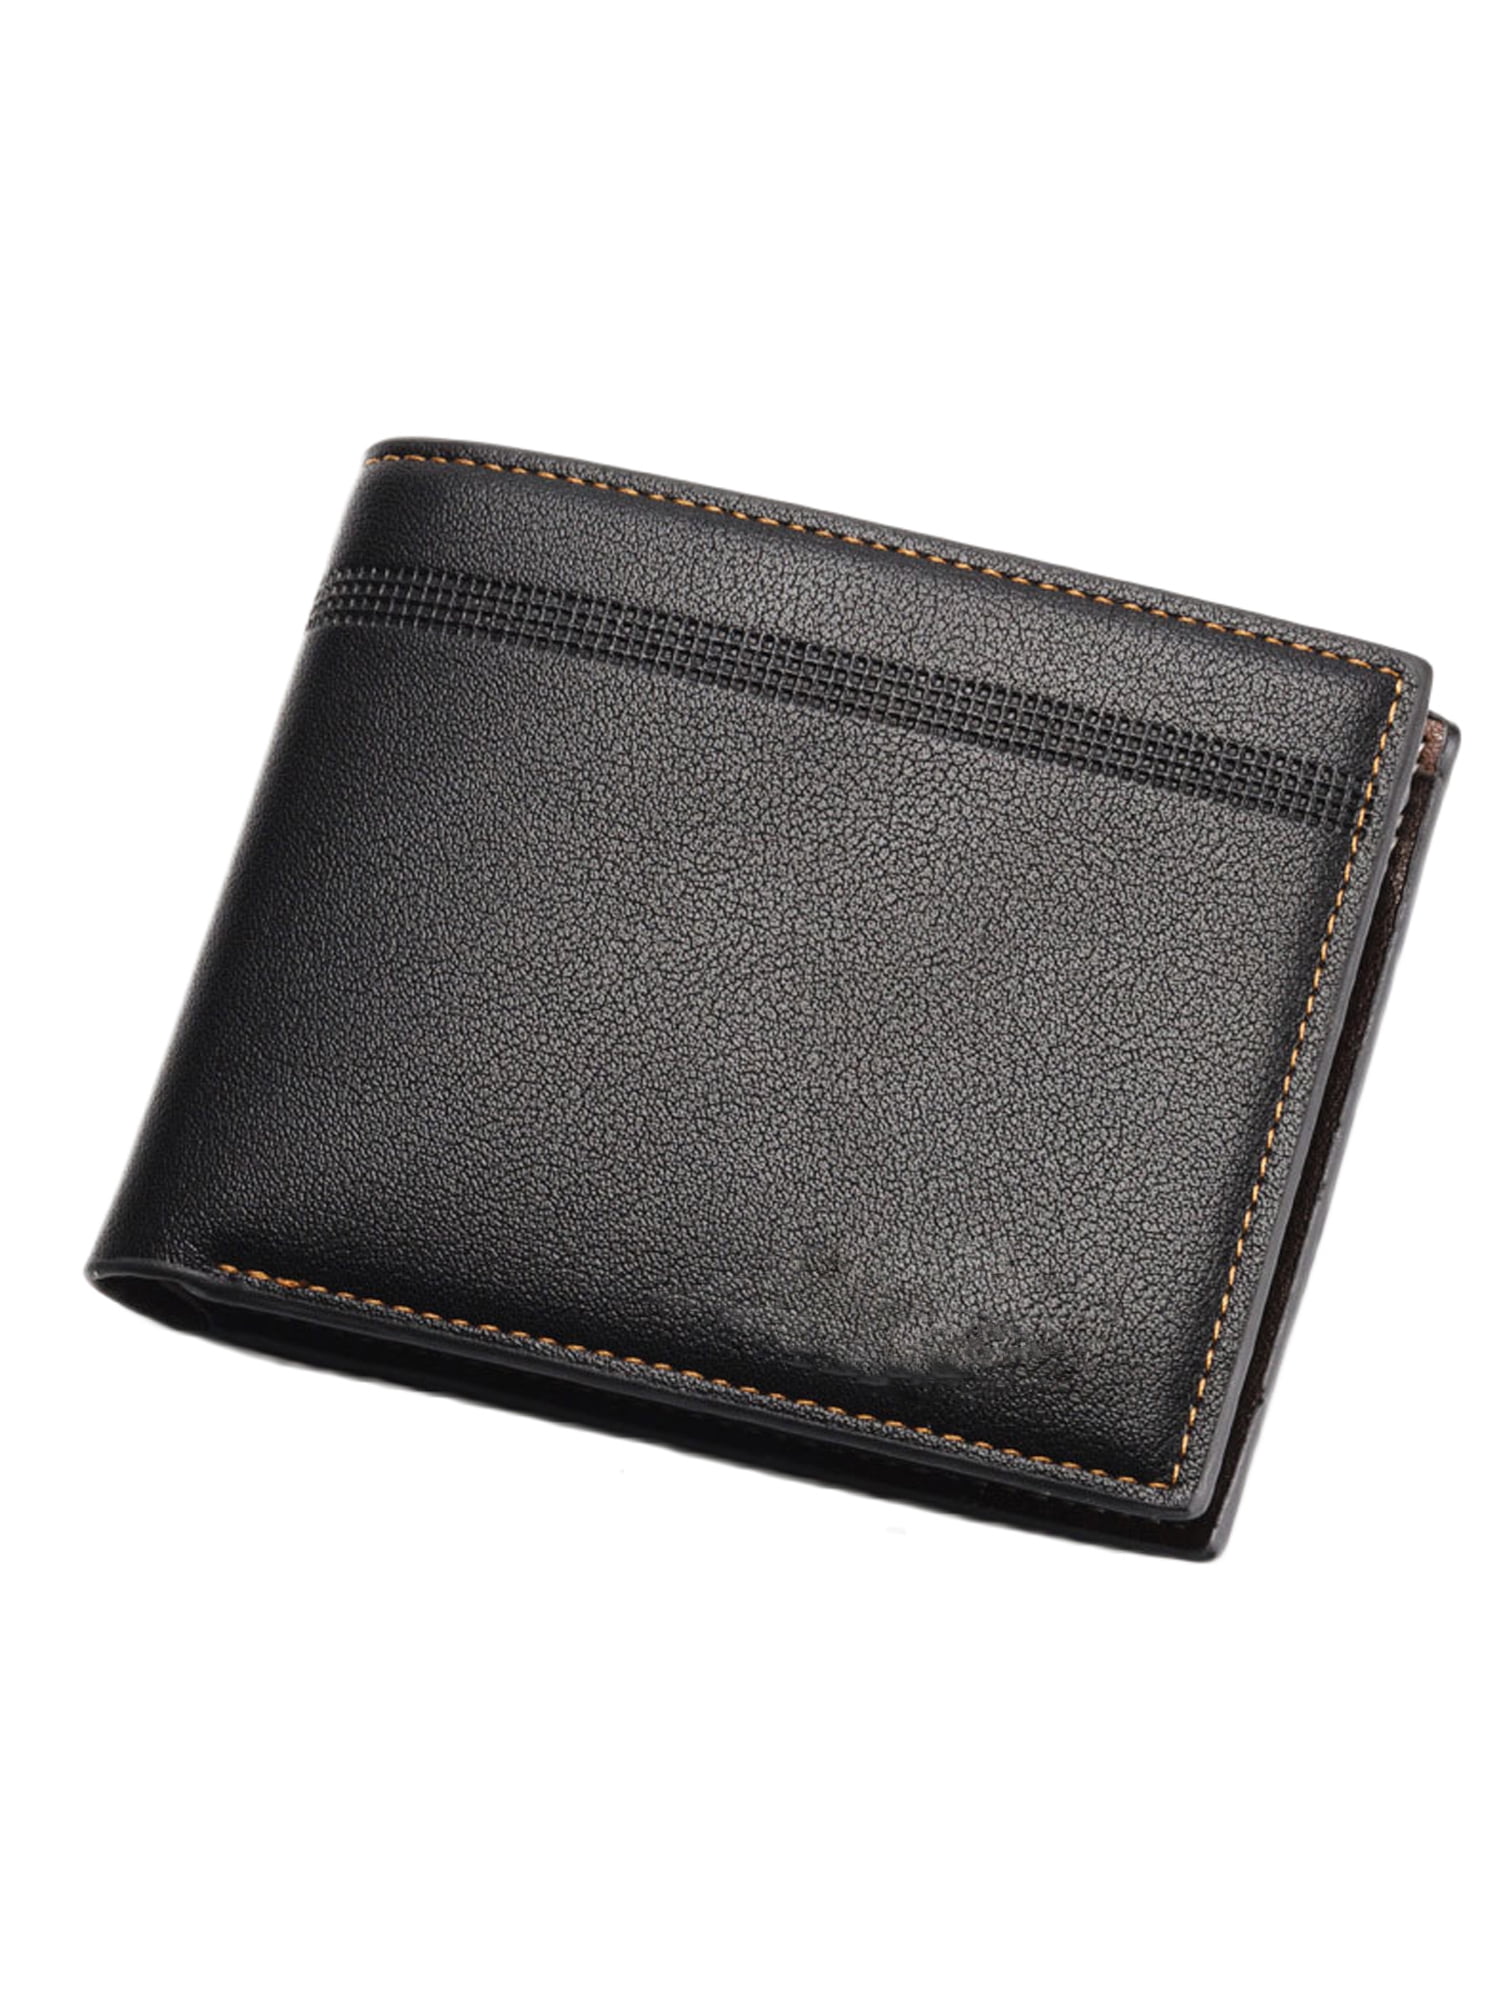 Johnston & Murphy RFID Mens Flip Bifold Leather Wallet Tan Oiled Full Grain 